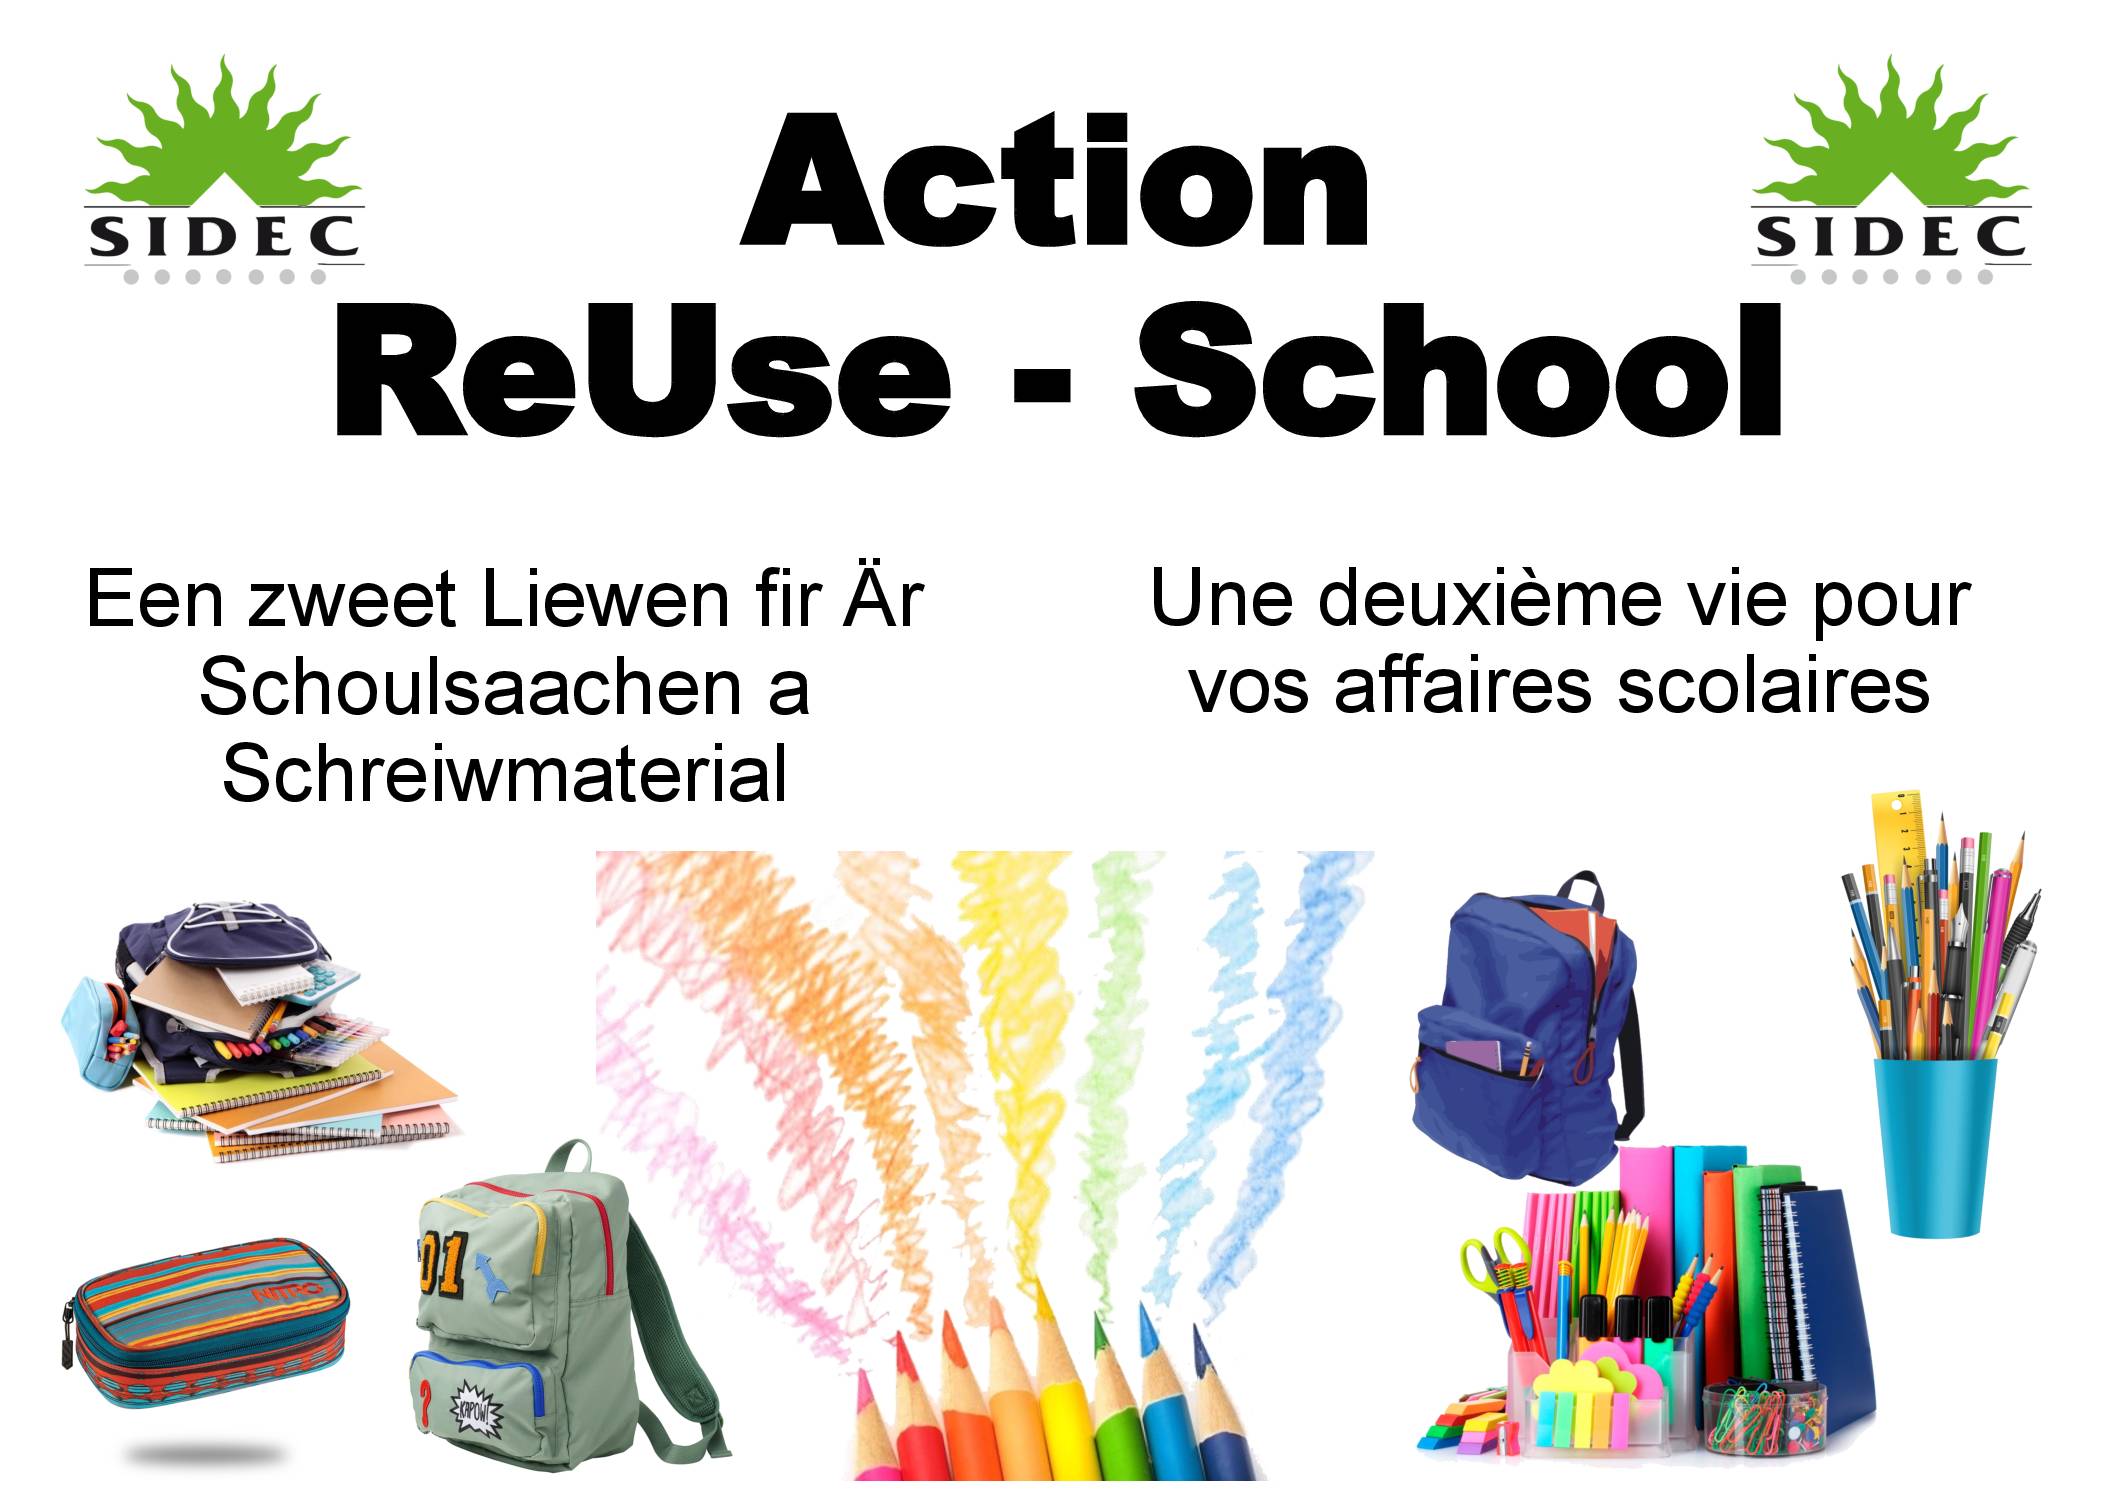 Action ReUse School – Sidec